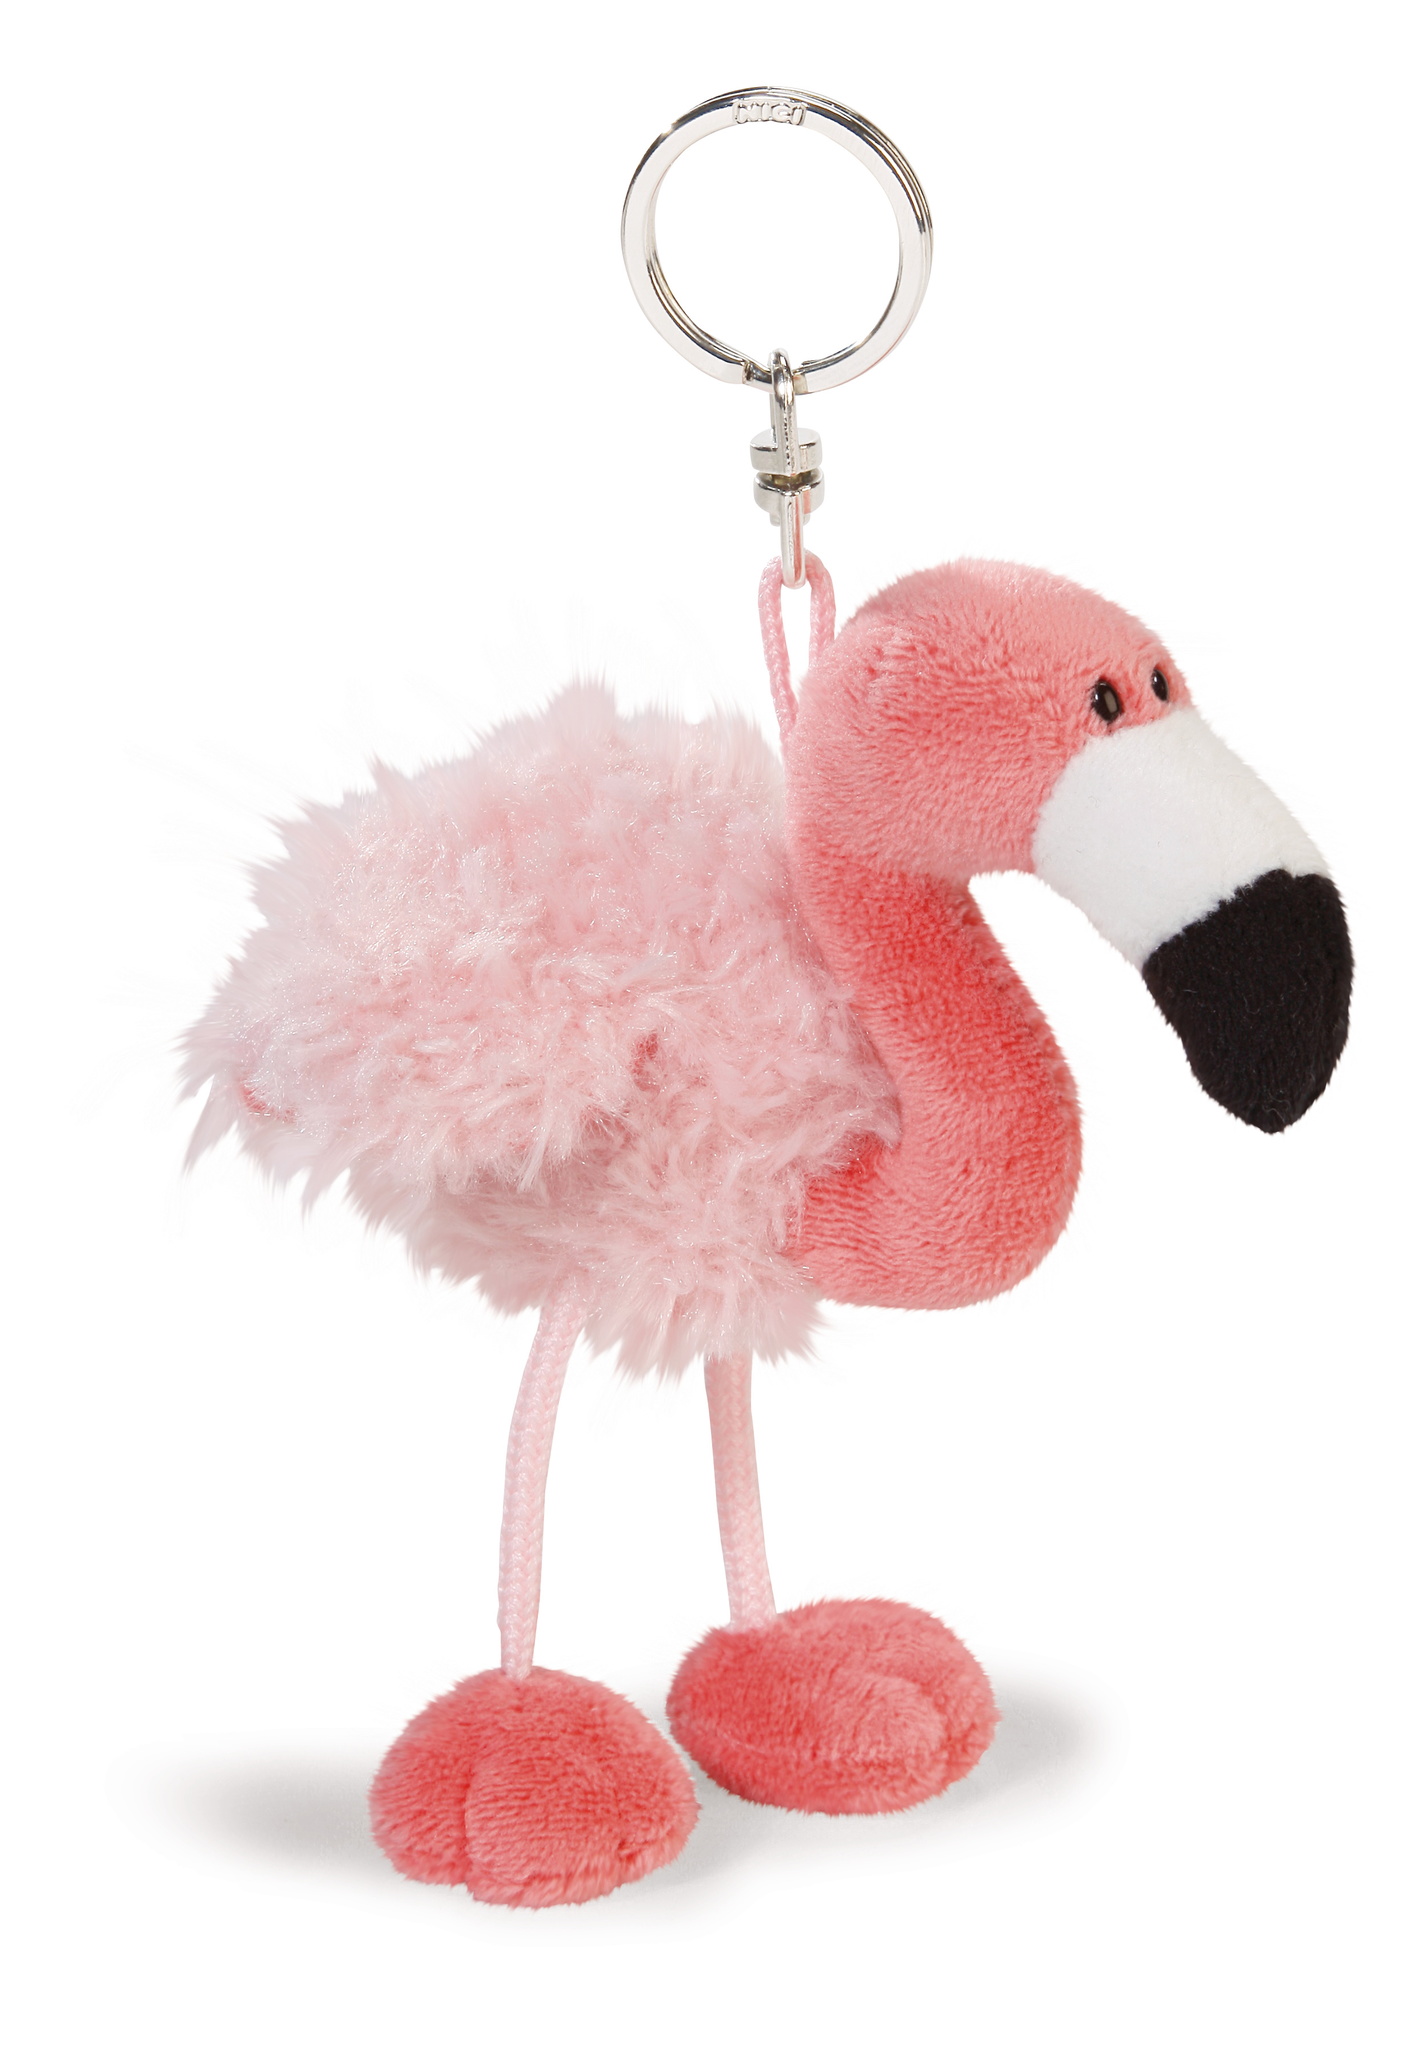 Nici Plüsch Schlüsselanhänger Flamingo 10cm Stofftier Plüschtier Anhänger keyfob 